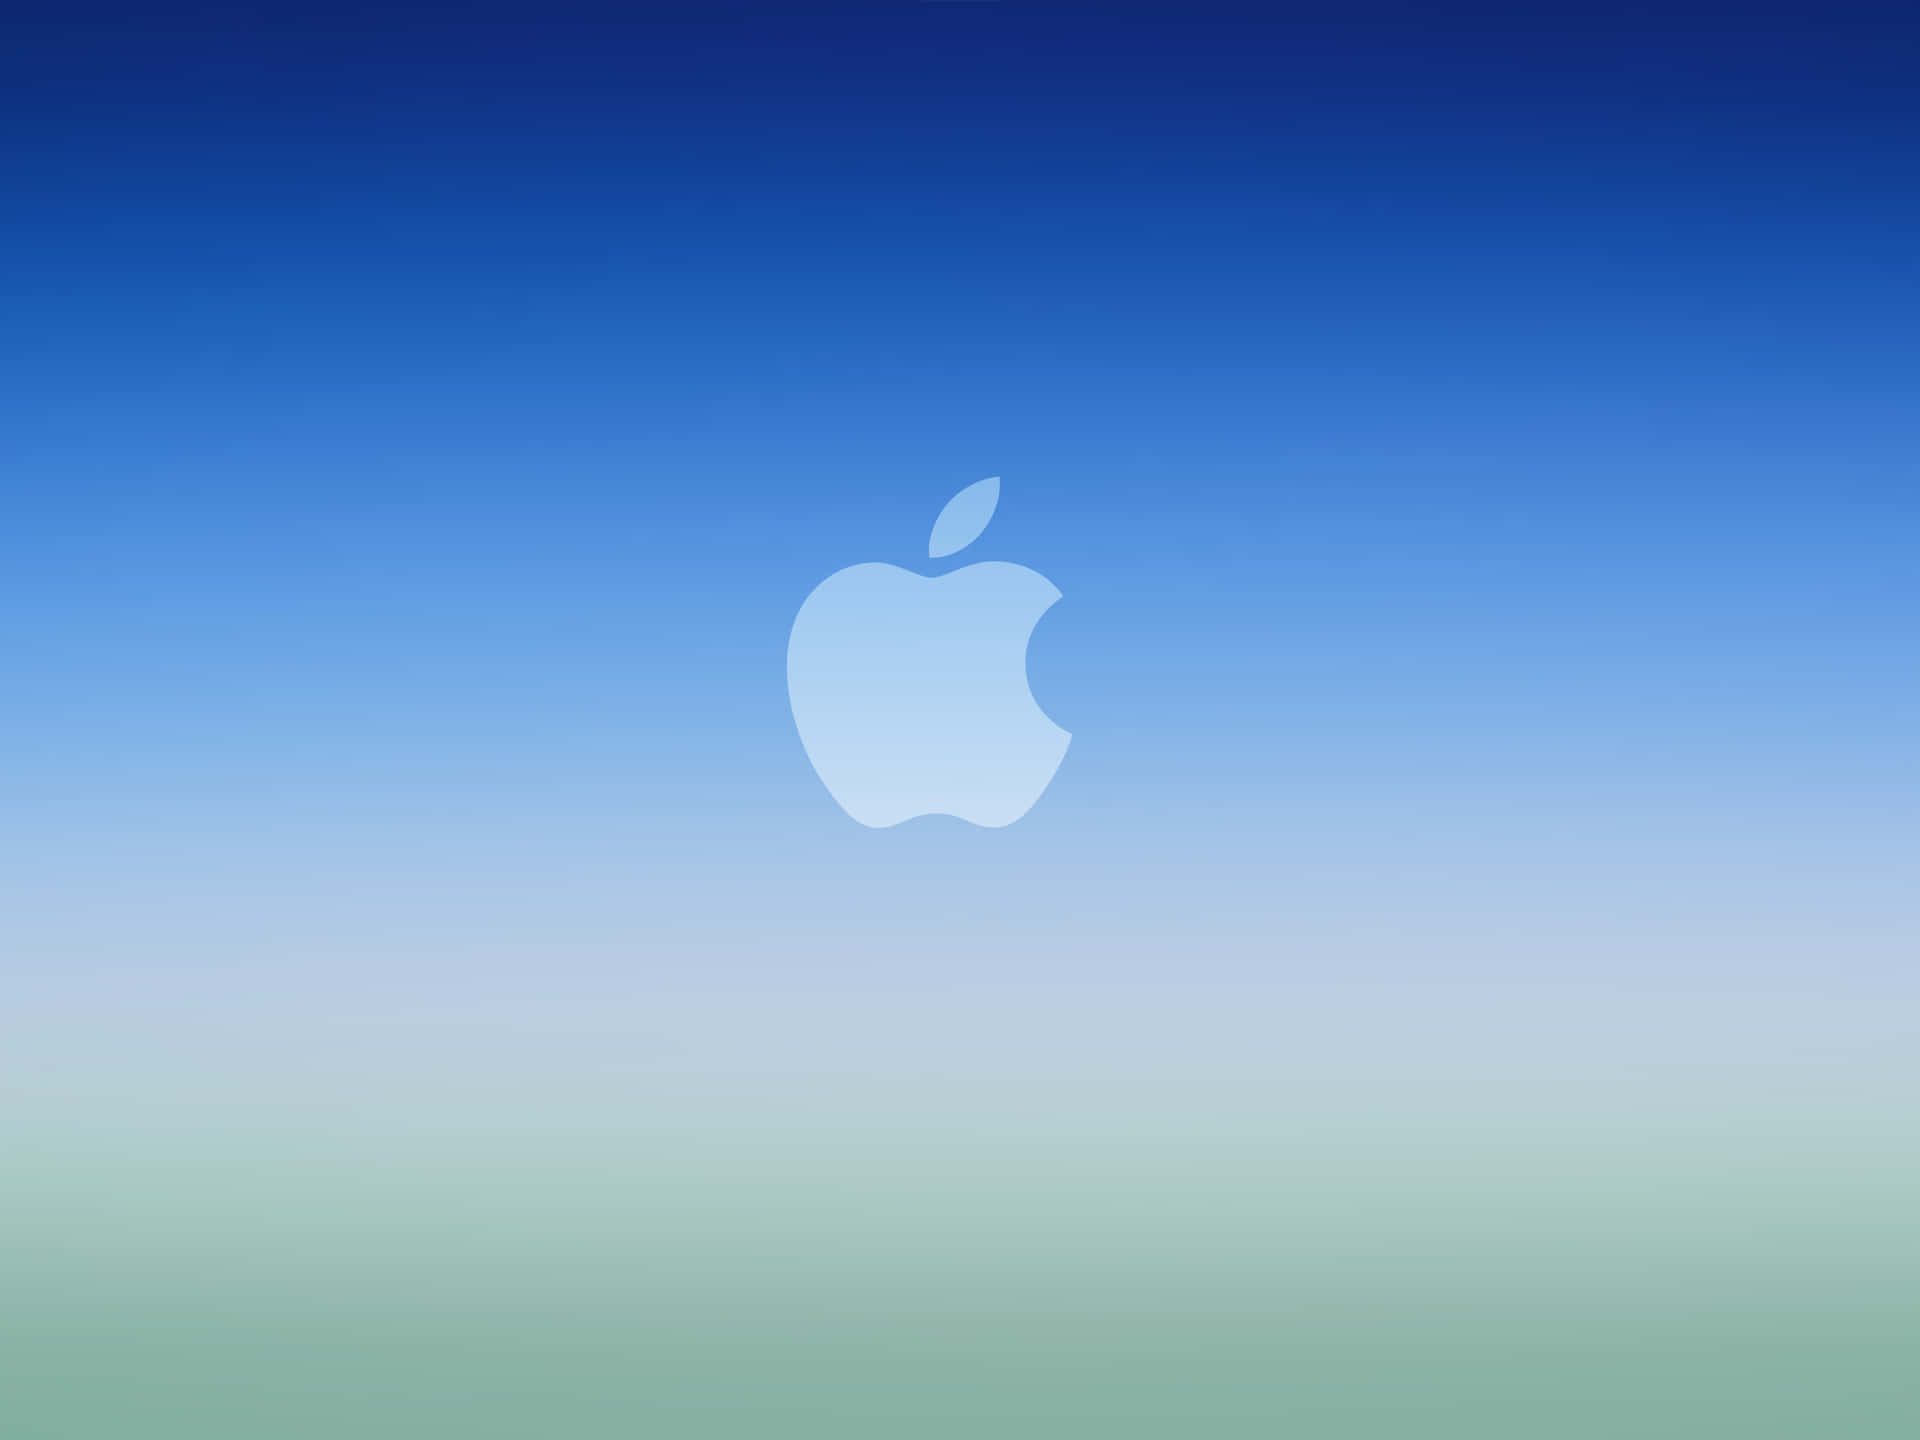 Äpplelogotypen På En Blå Bakgrund. Wallpaper